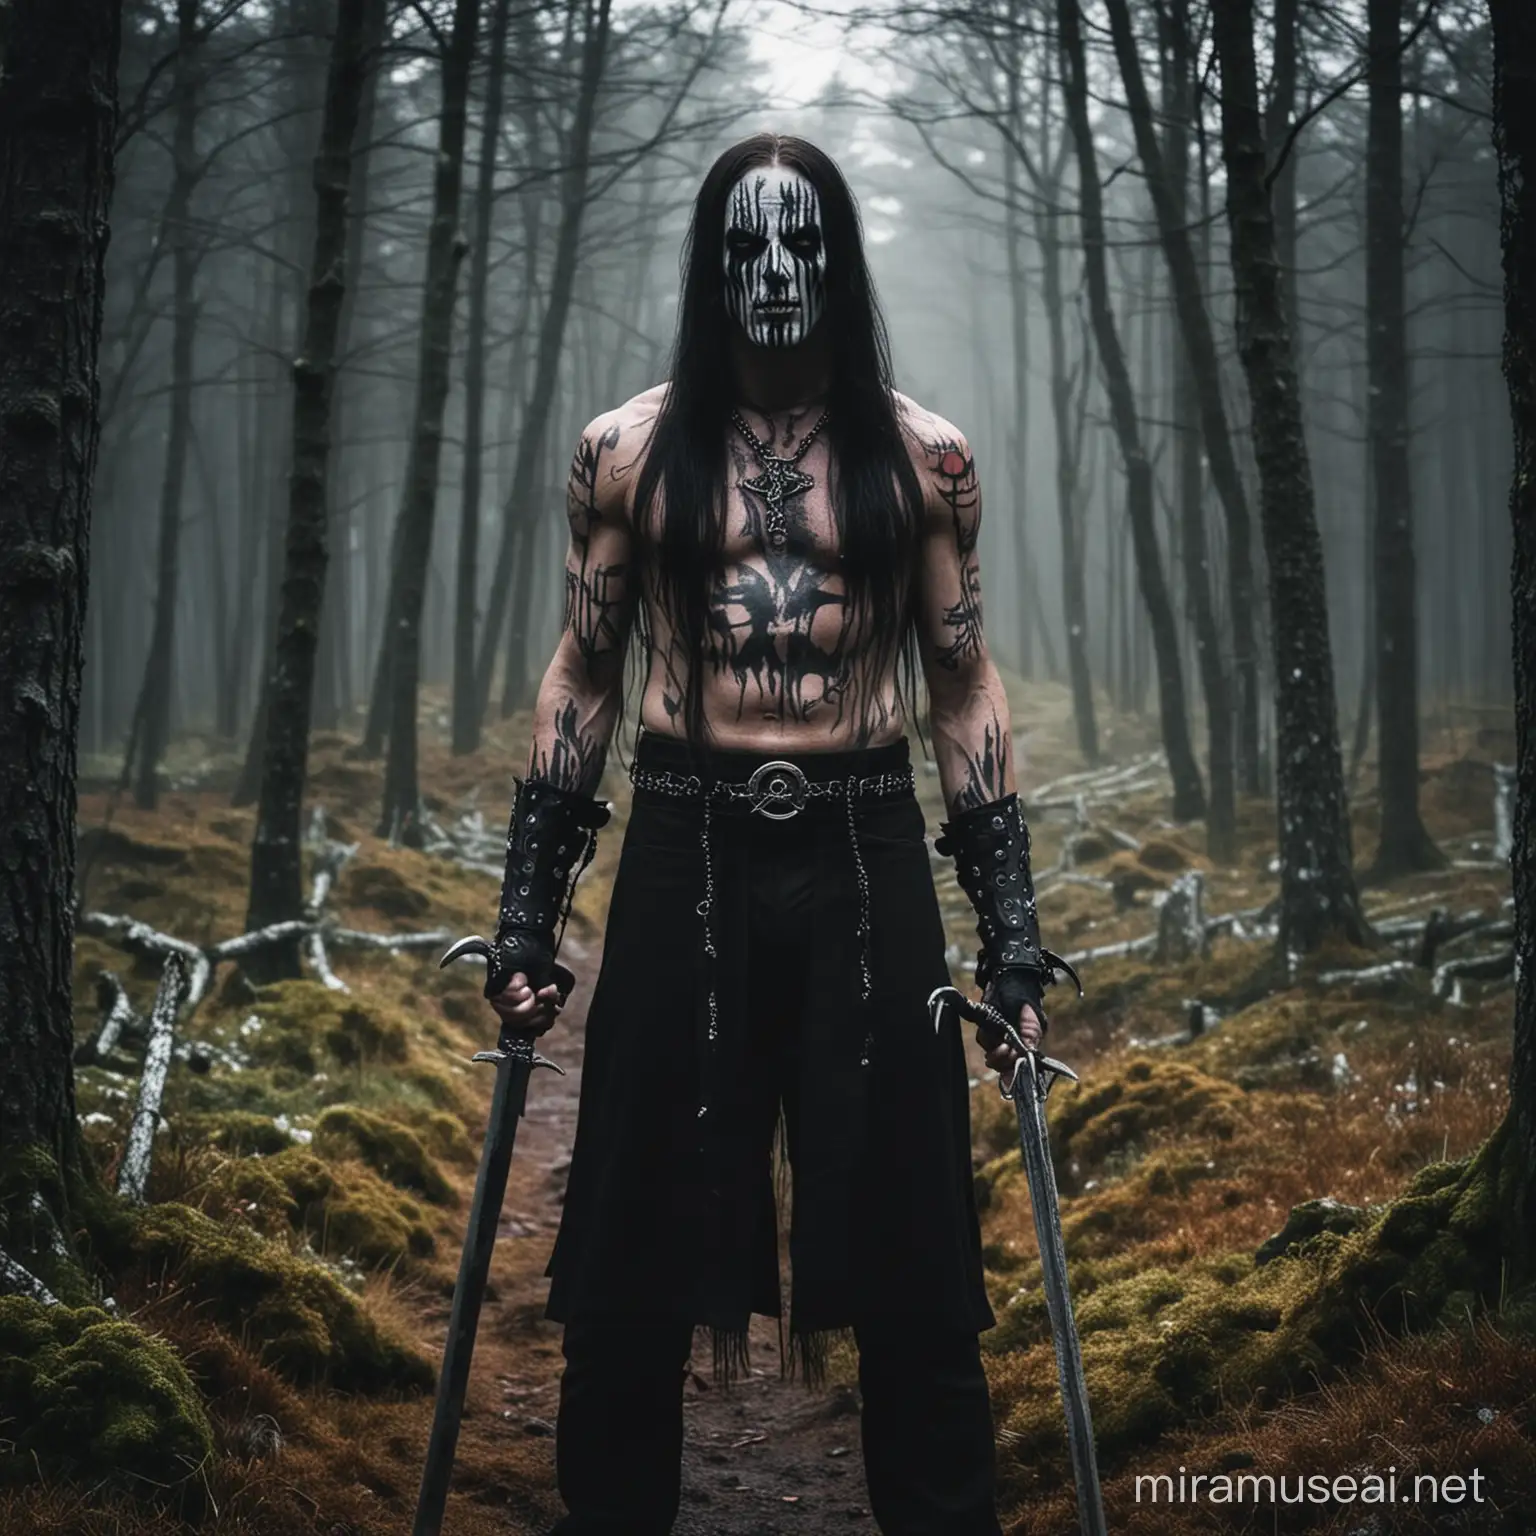 Norwegian black metal